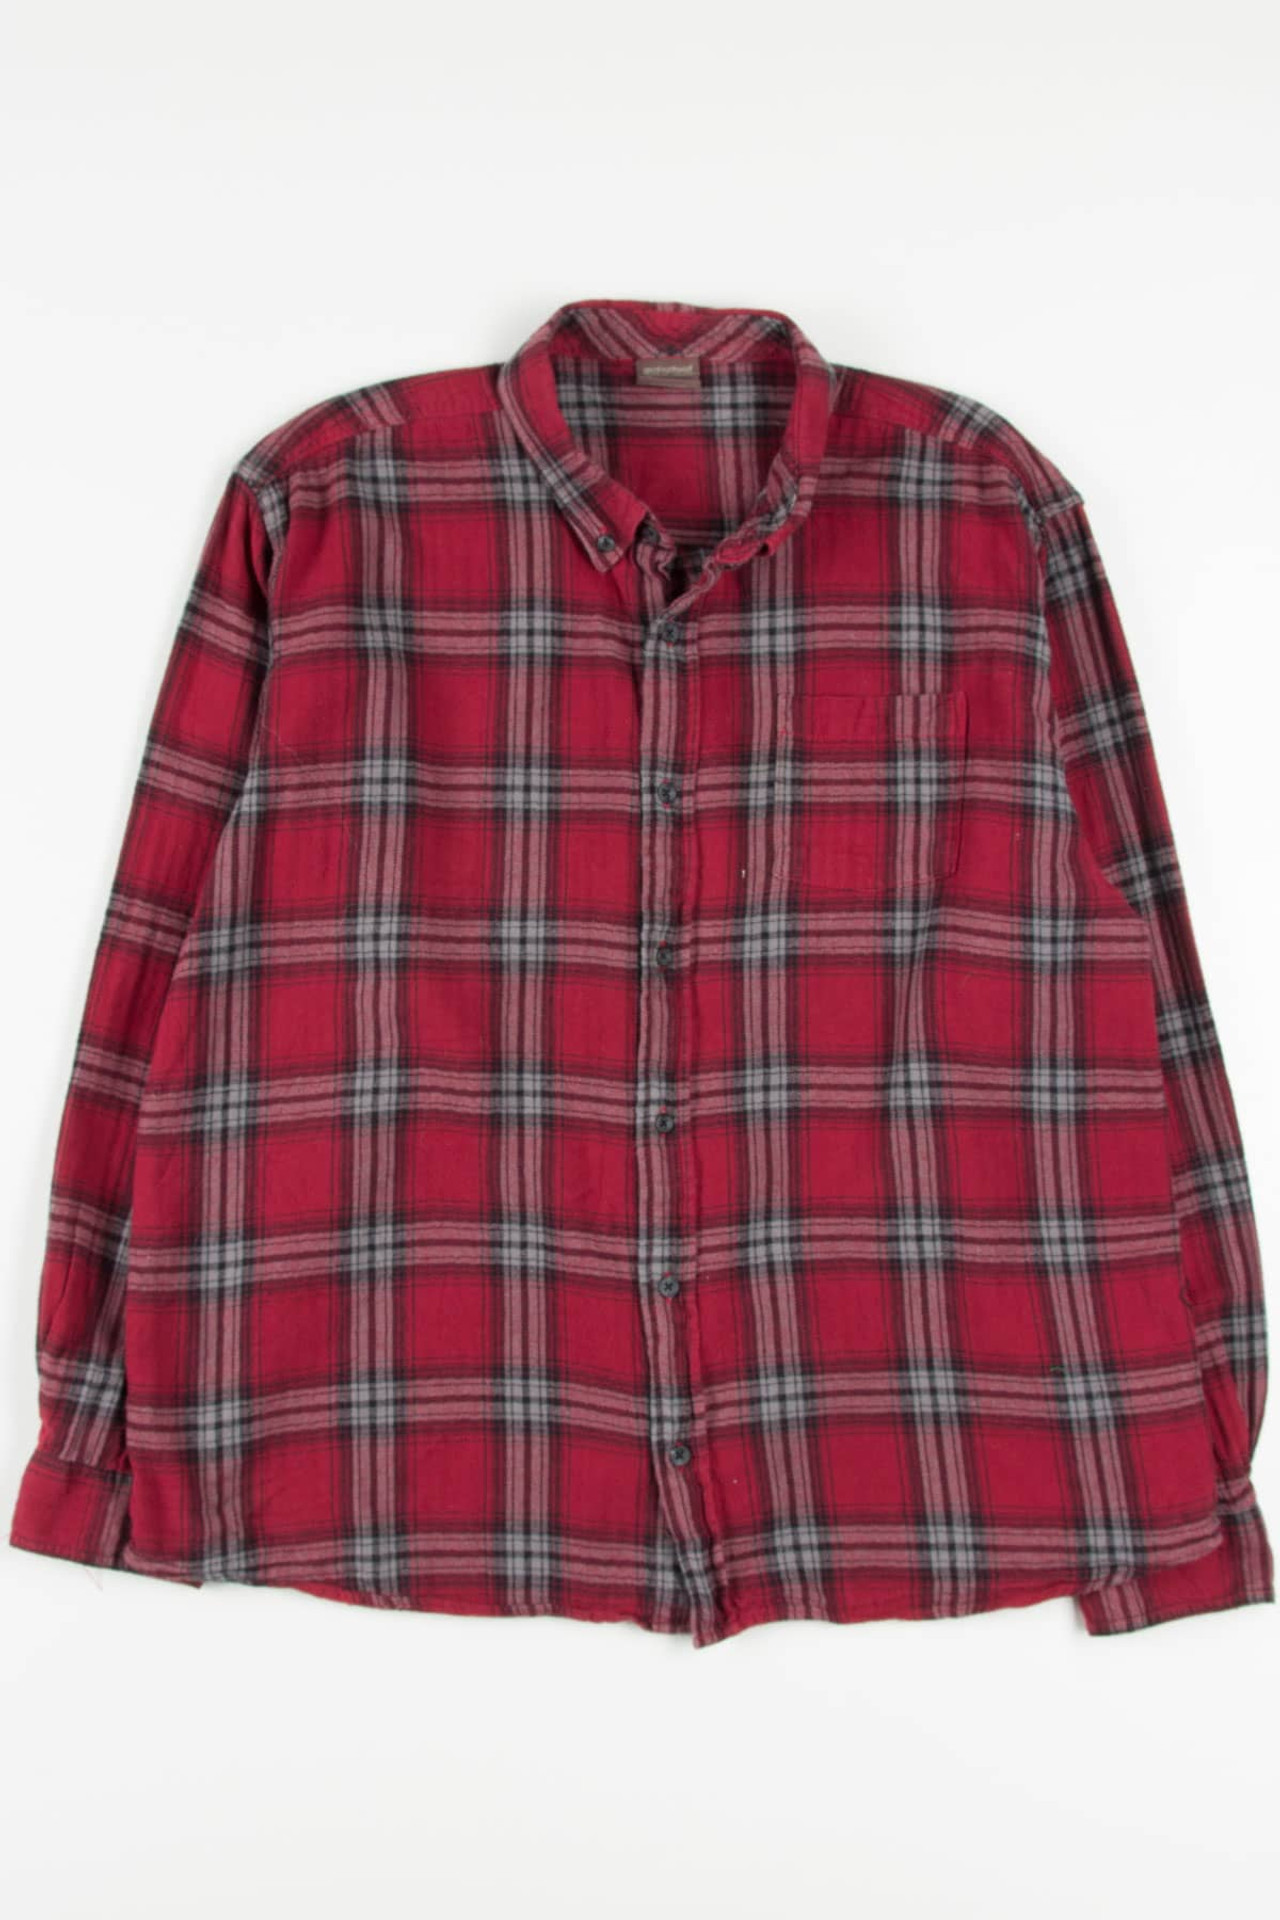 Vintage Great Northwest Flannel Shirt 3627 - Ragstock.com